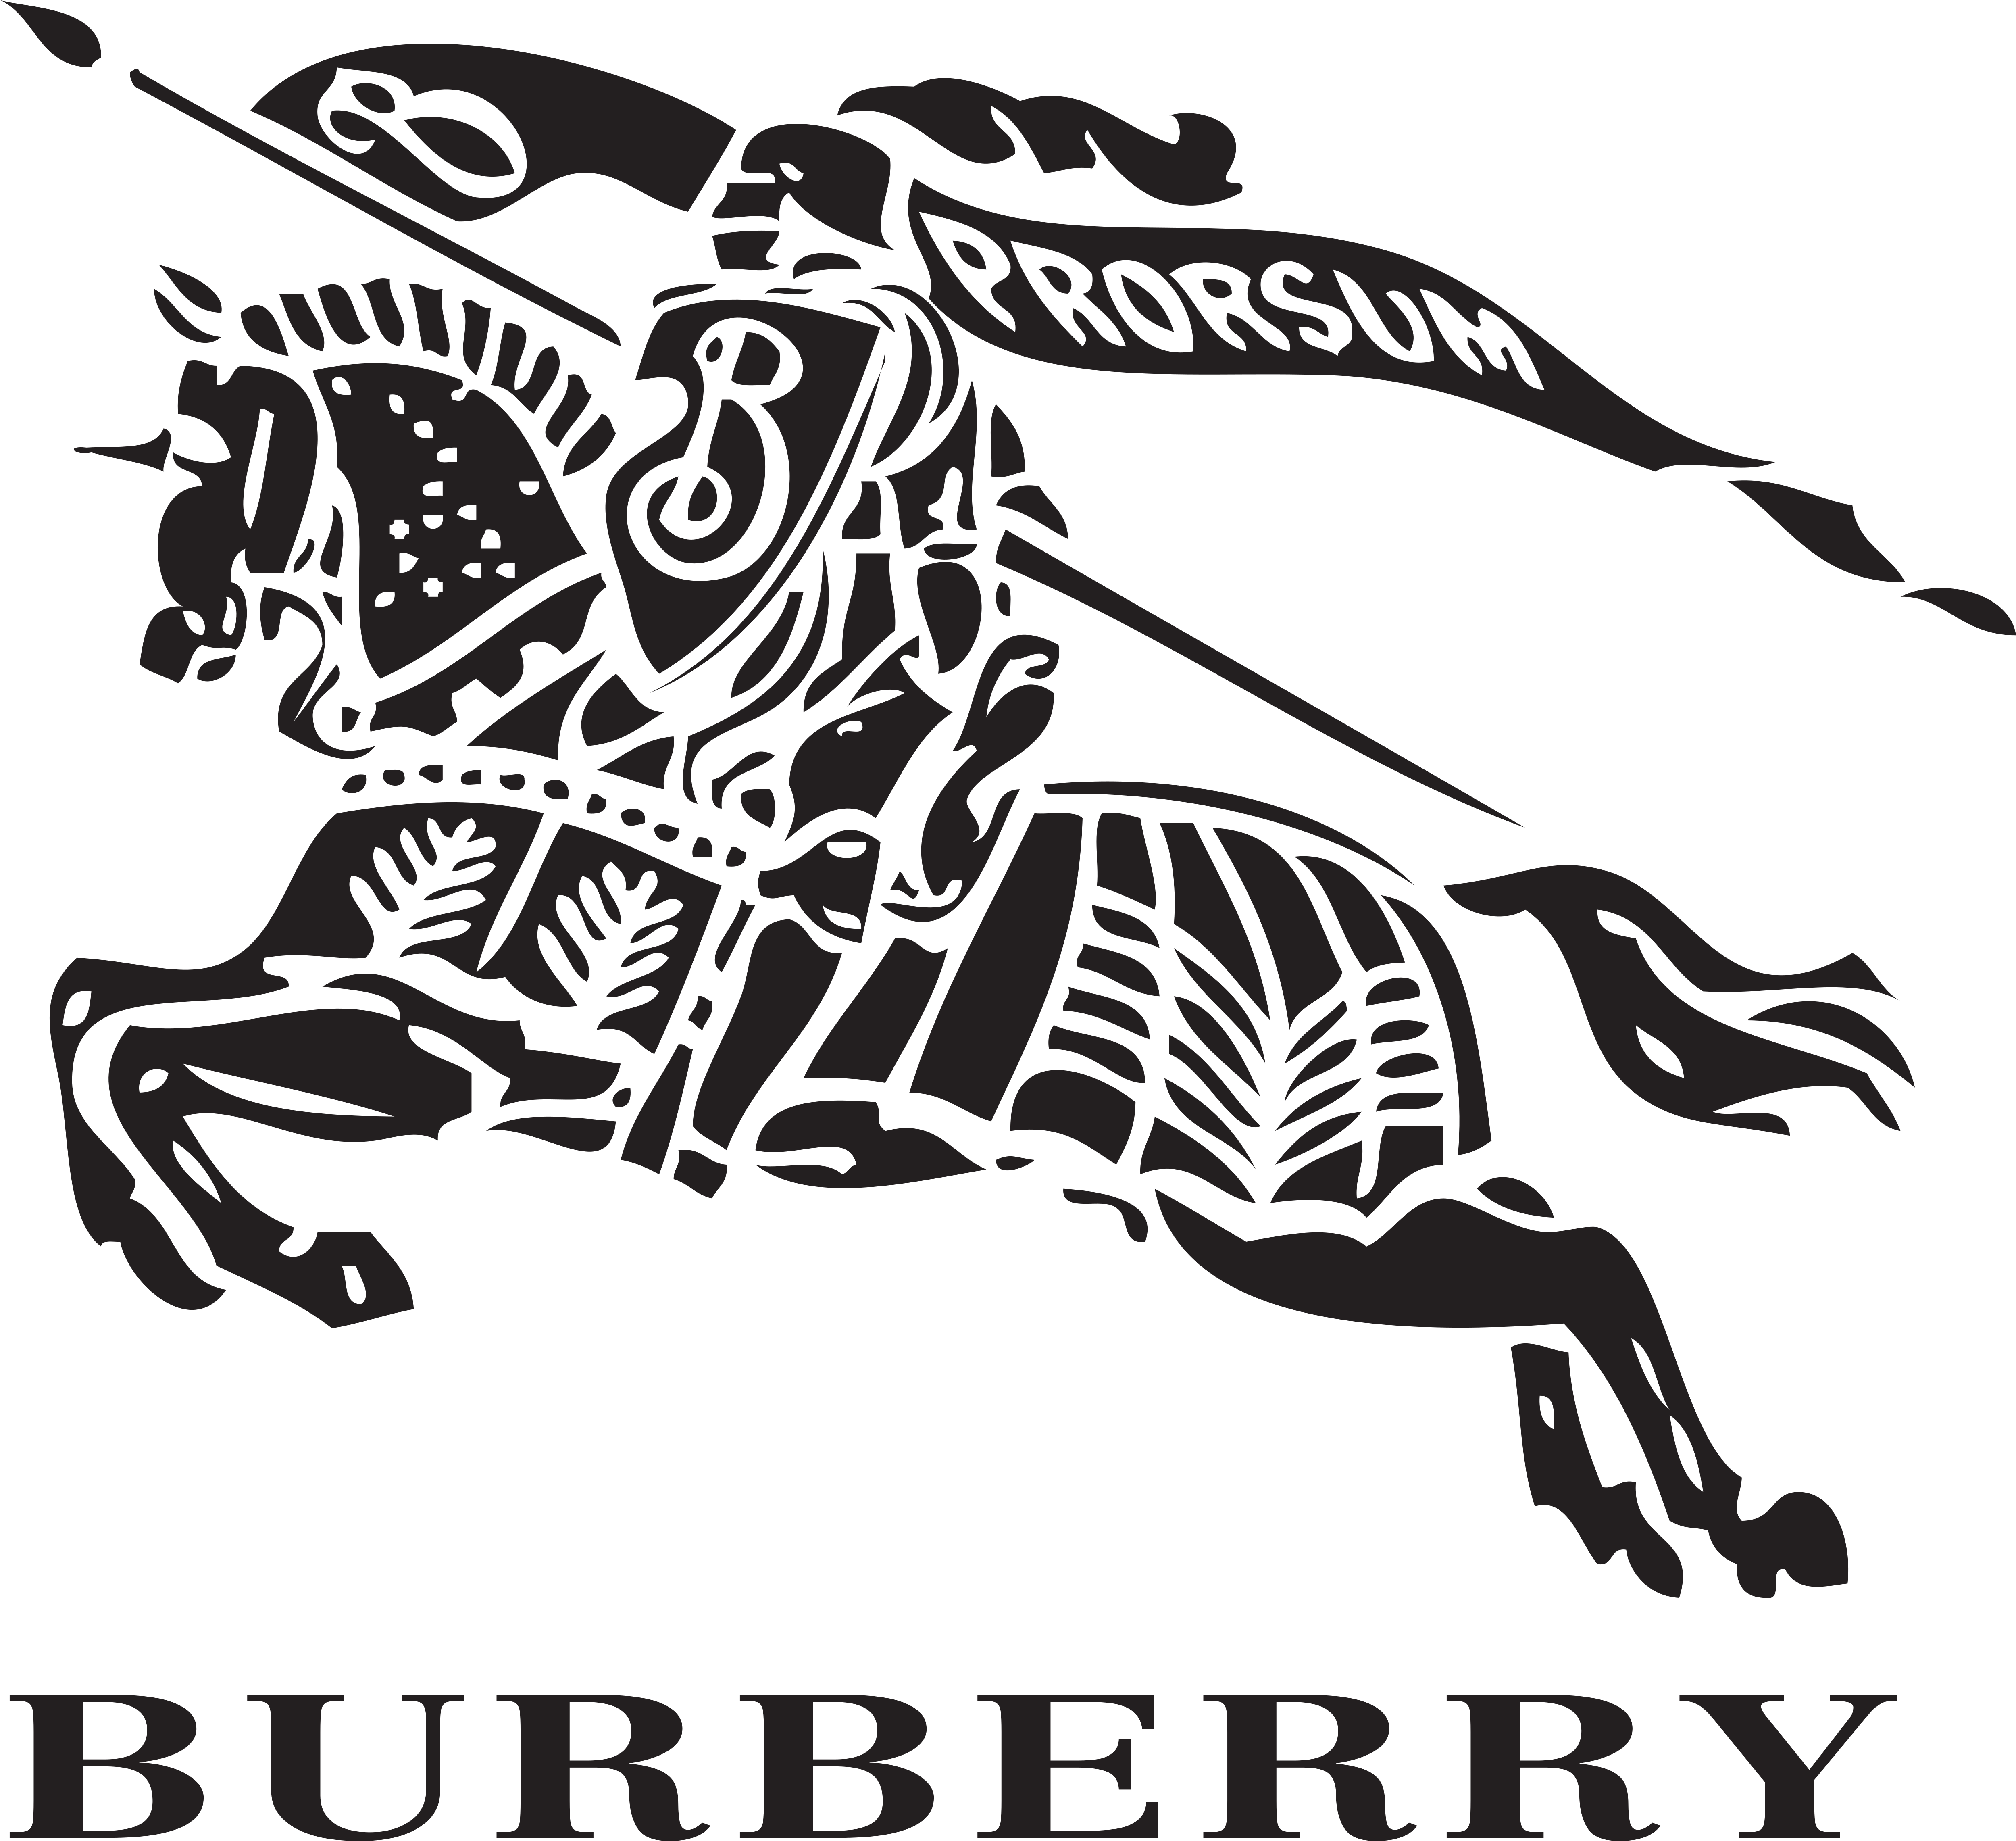 Burberry – Logos Download